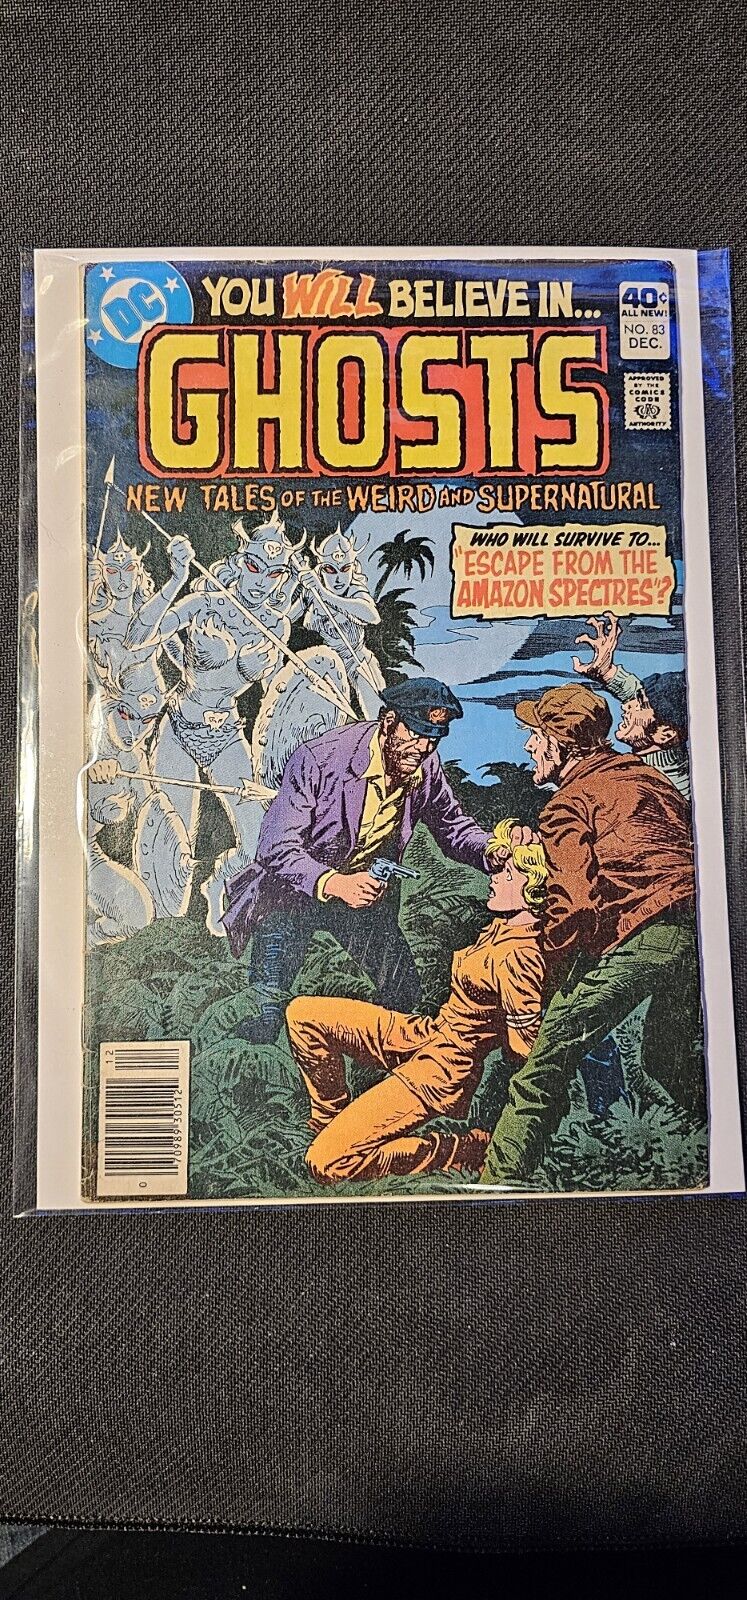 1979 You Will Believe In Ghosts Comic #83 Dec.